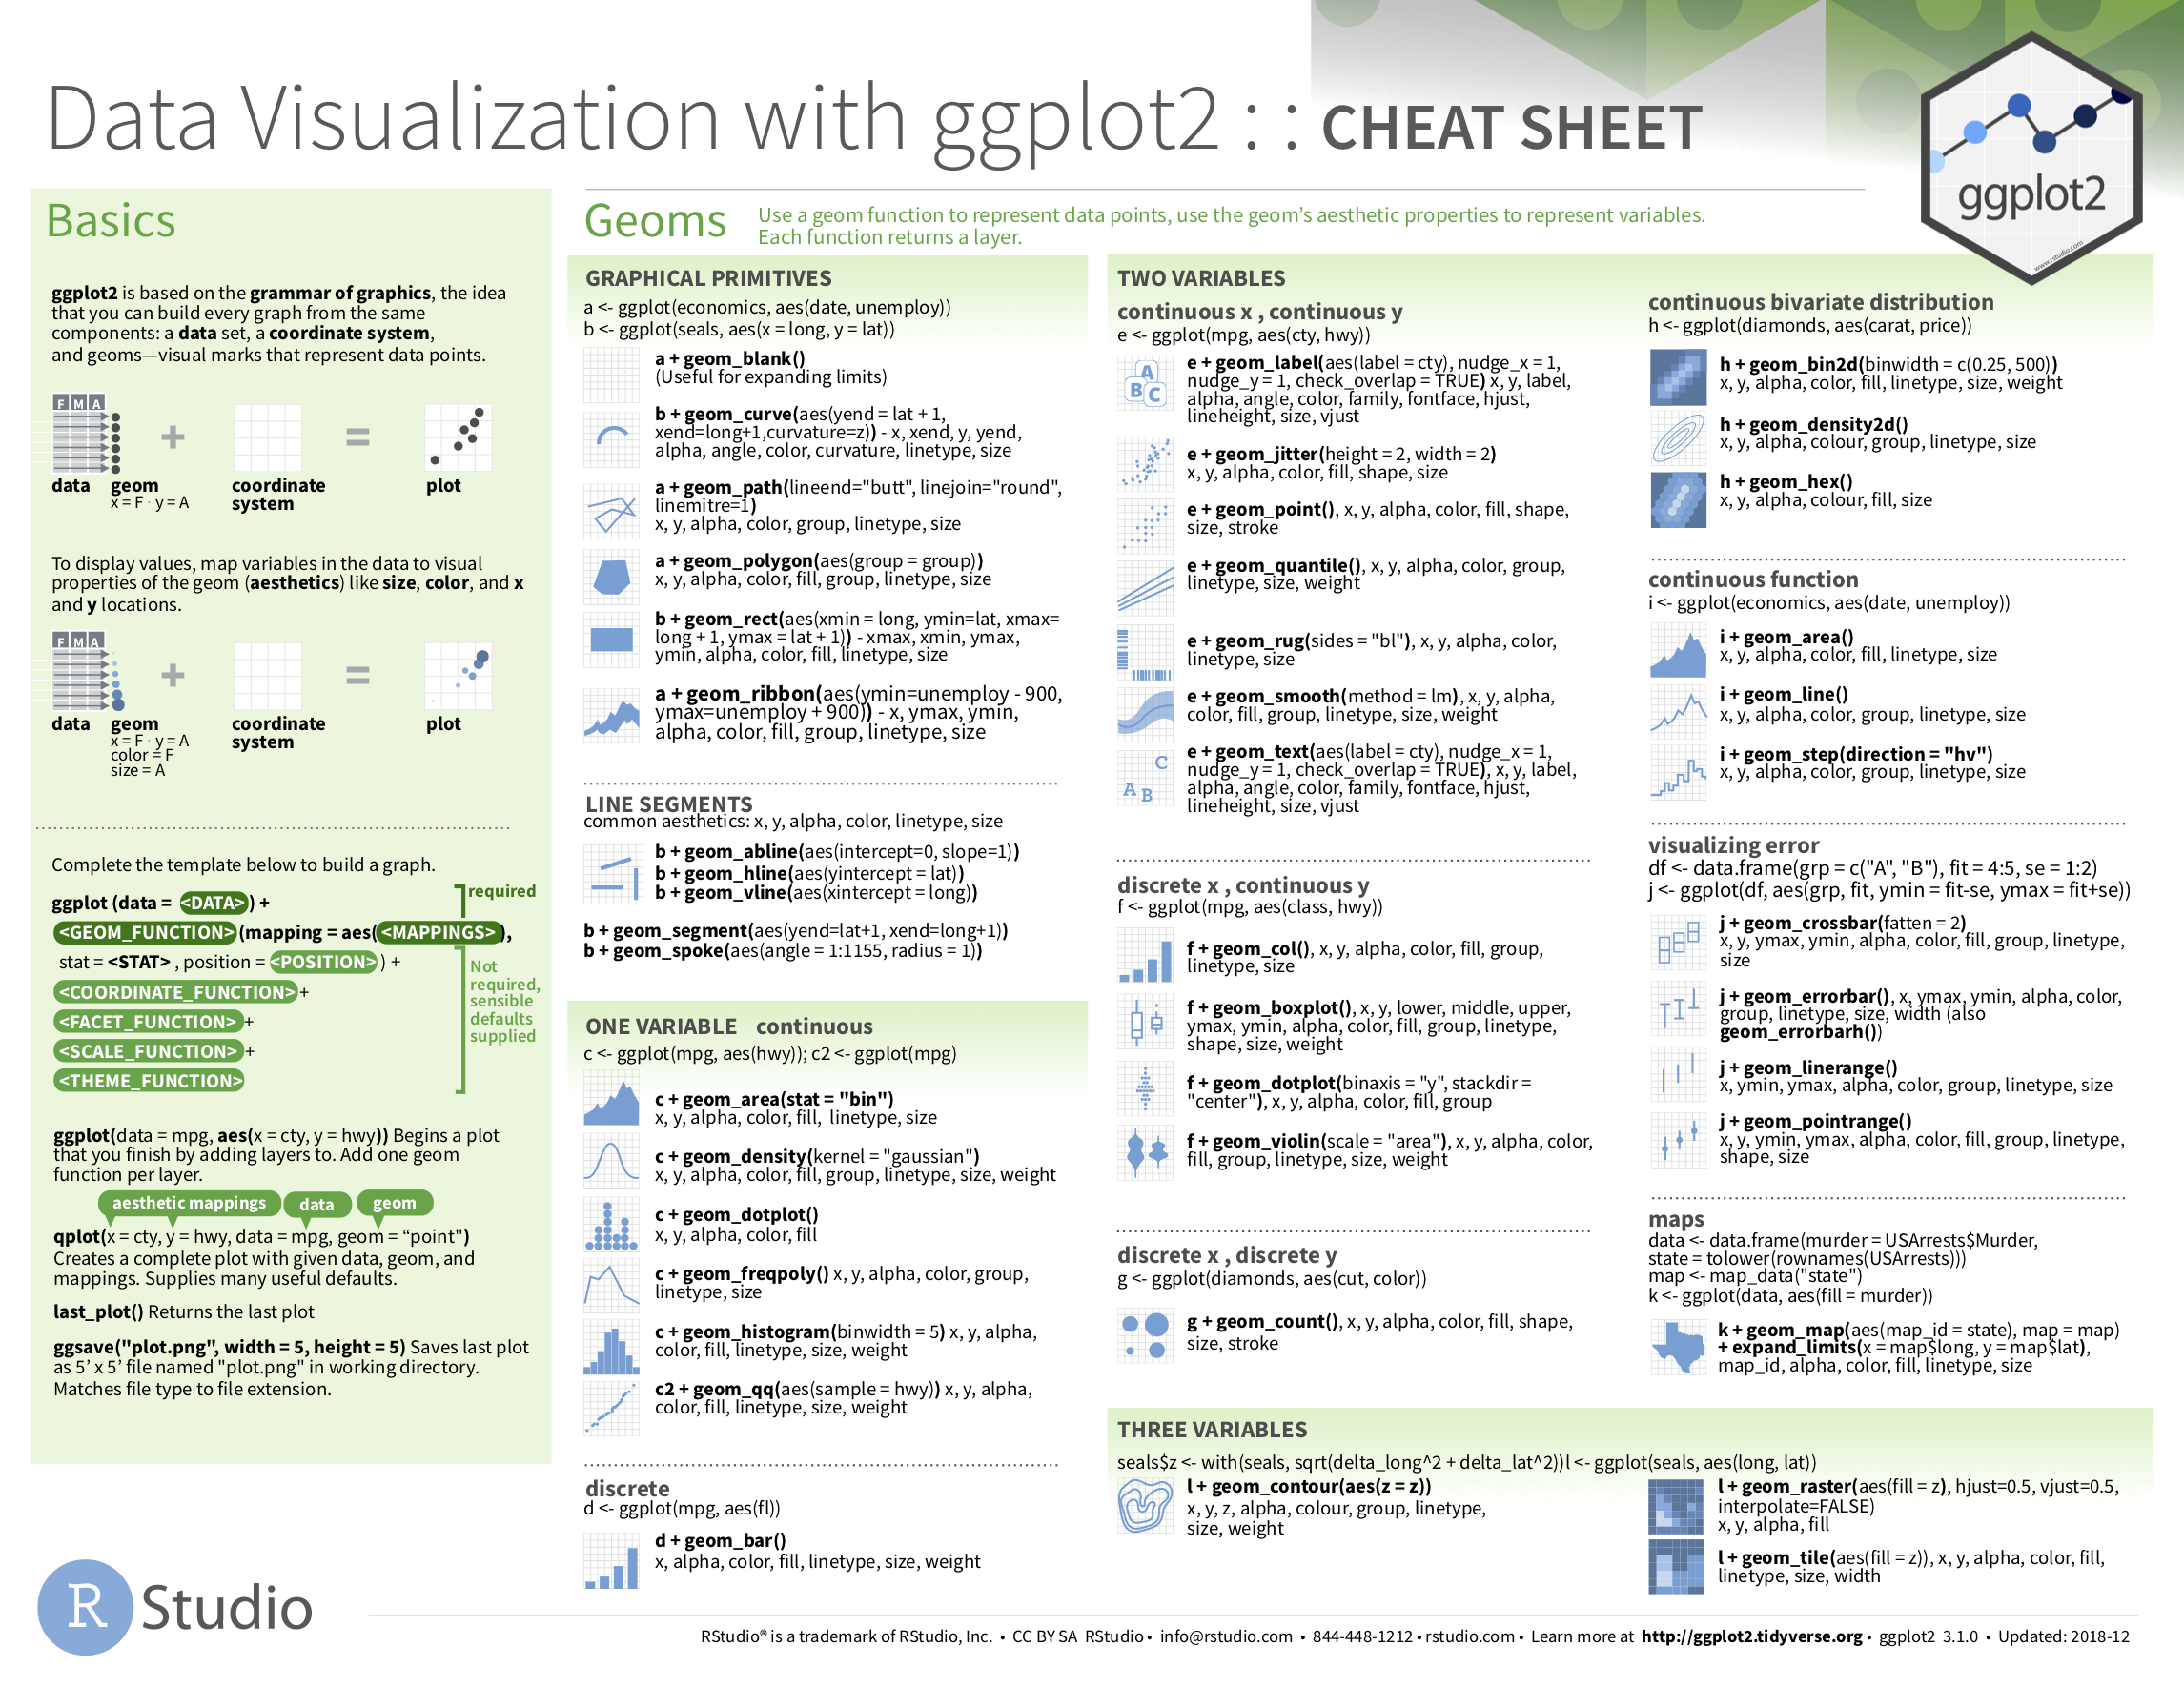 Data Visualization with ggplot2 cheatsheet.